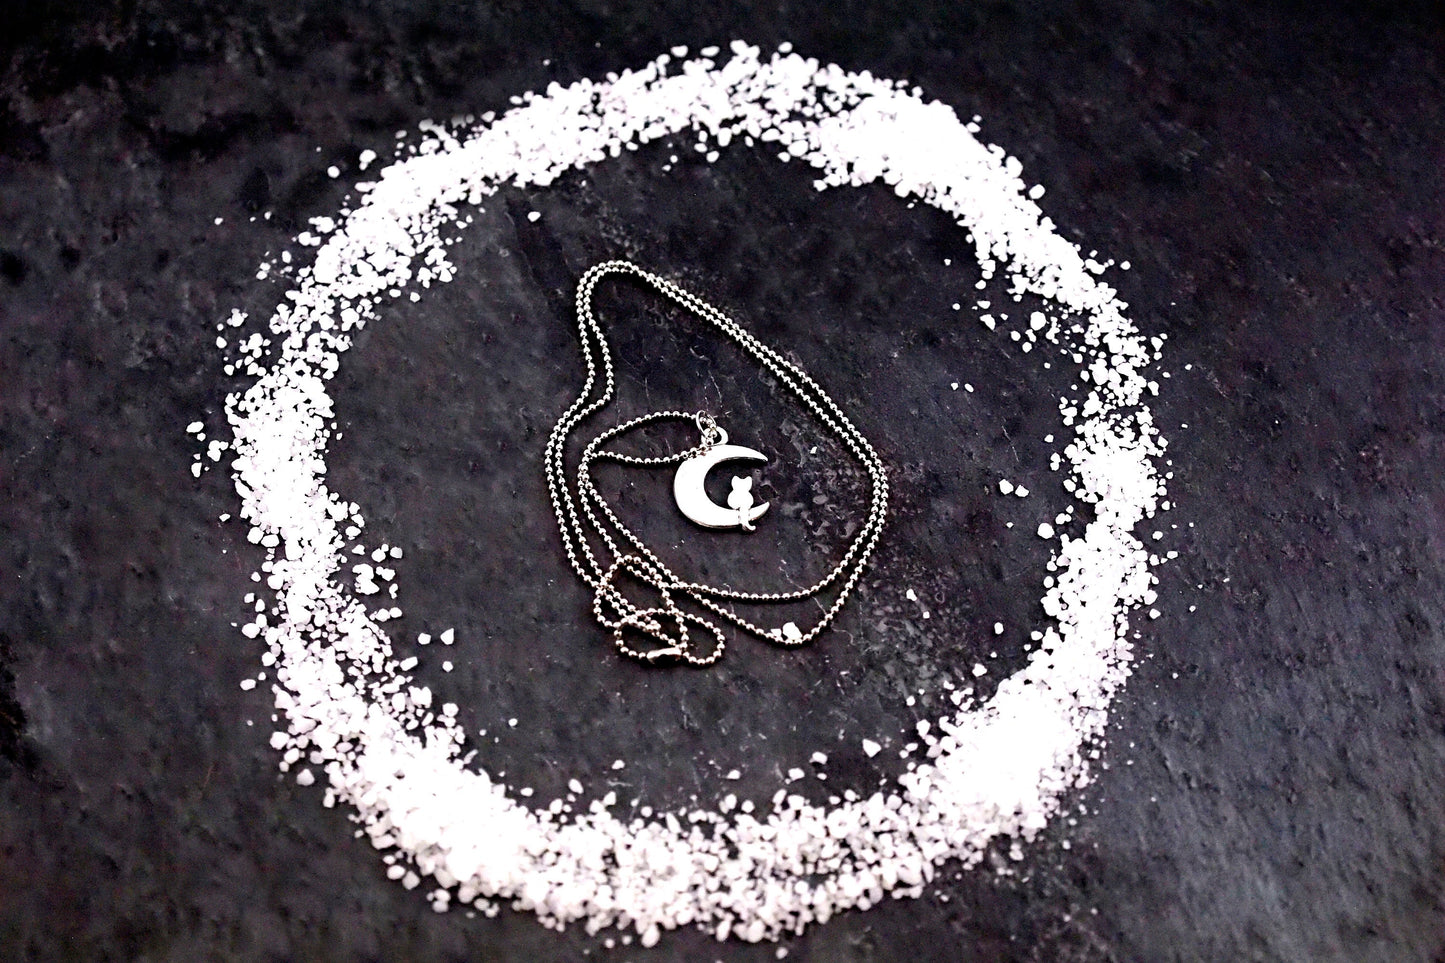 Cat & Moon Necklace ~ Animal Familiar Amulet